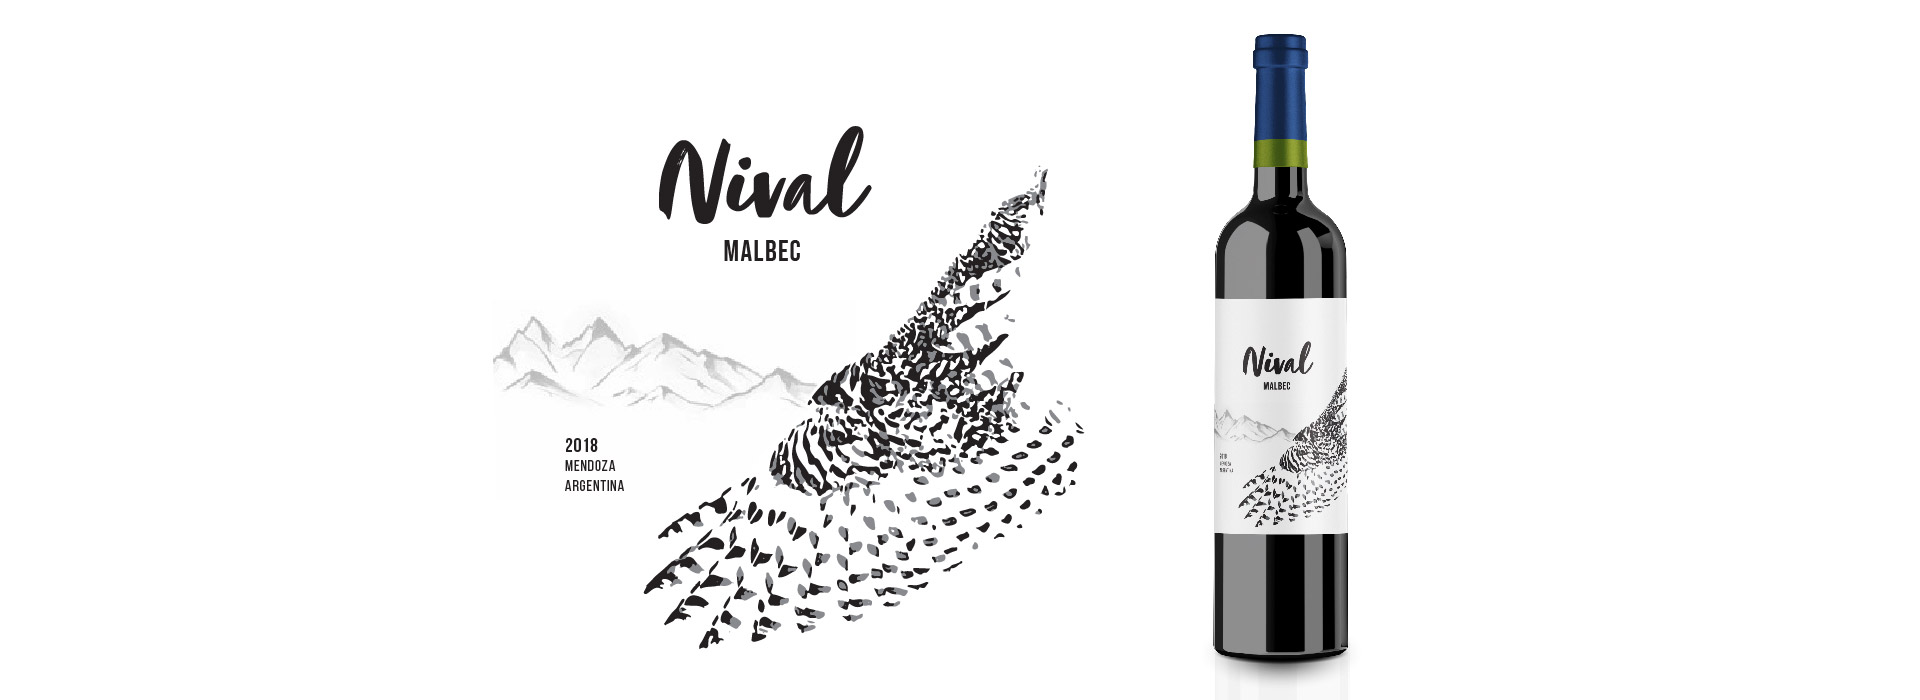 Etiqueta y botella de vino nival malbec